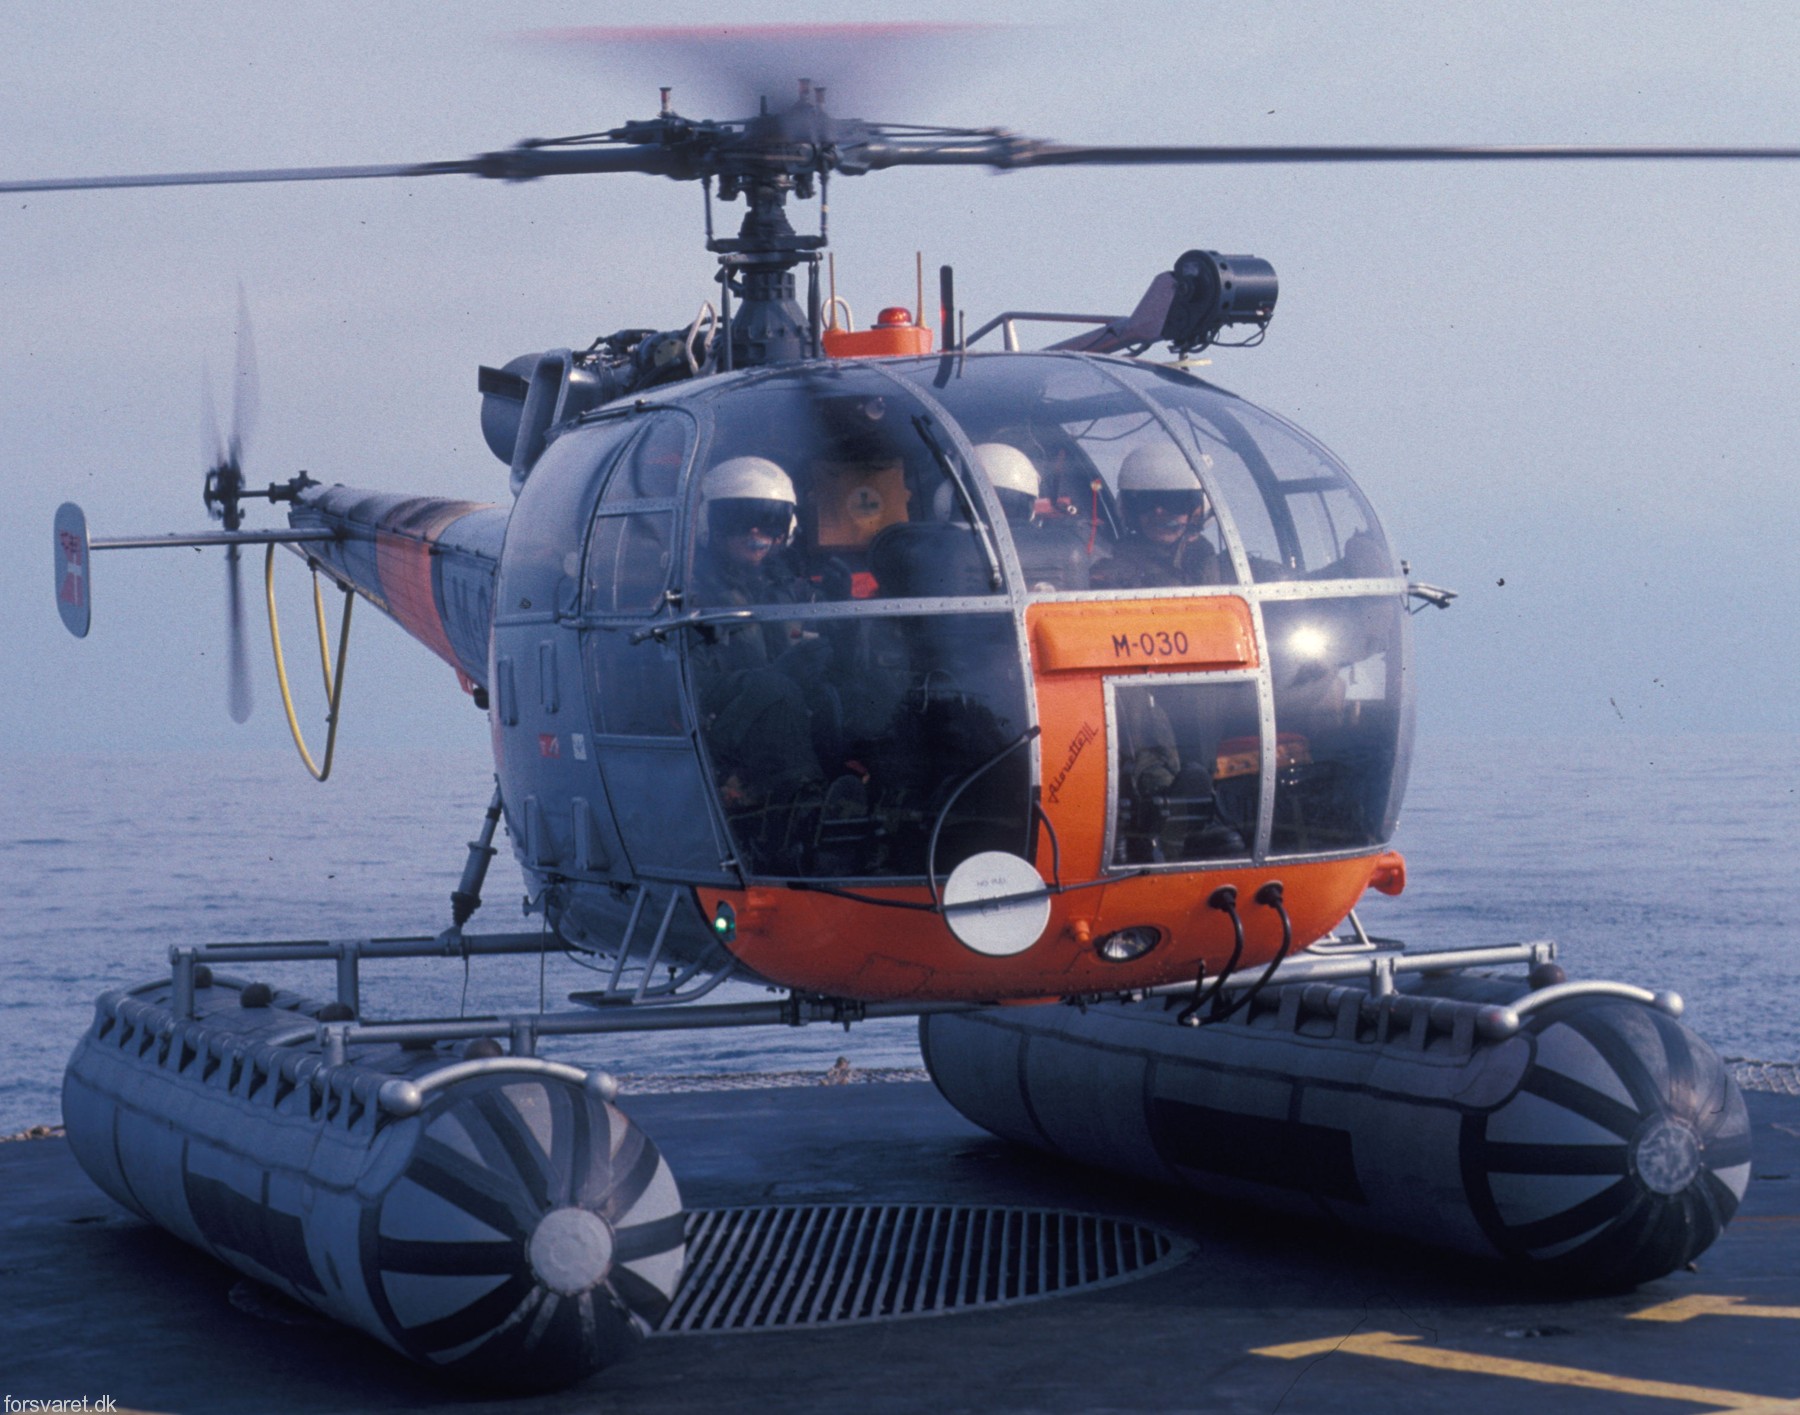 sa 316b alouette iii helicopter royal danish navy søværnet kongelige danske marine sud aviation m-030 04